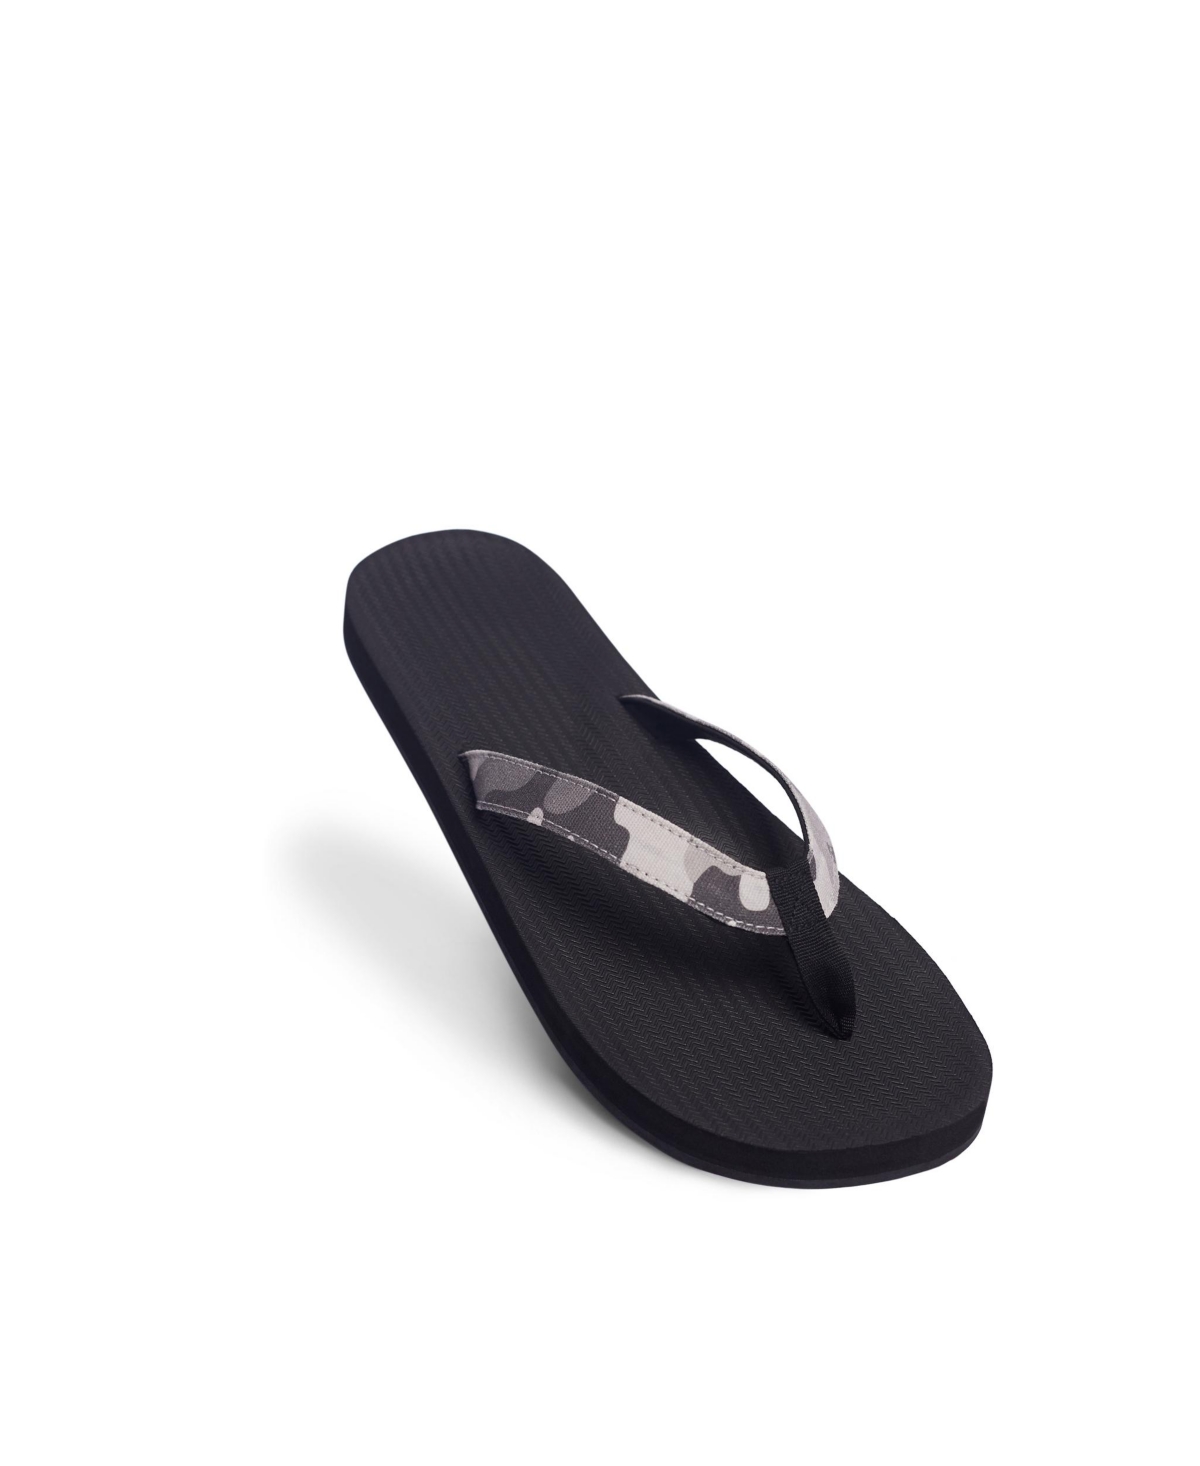 Men's Flip Flops Camo - Black/white camo